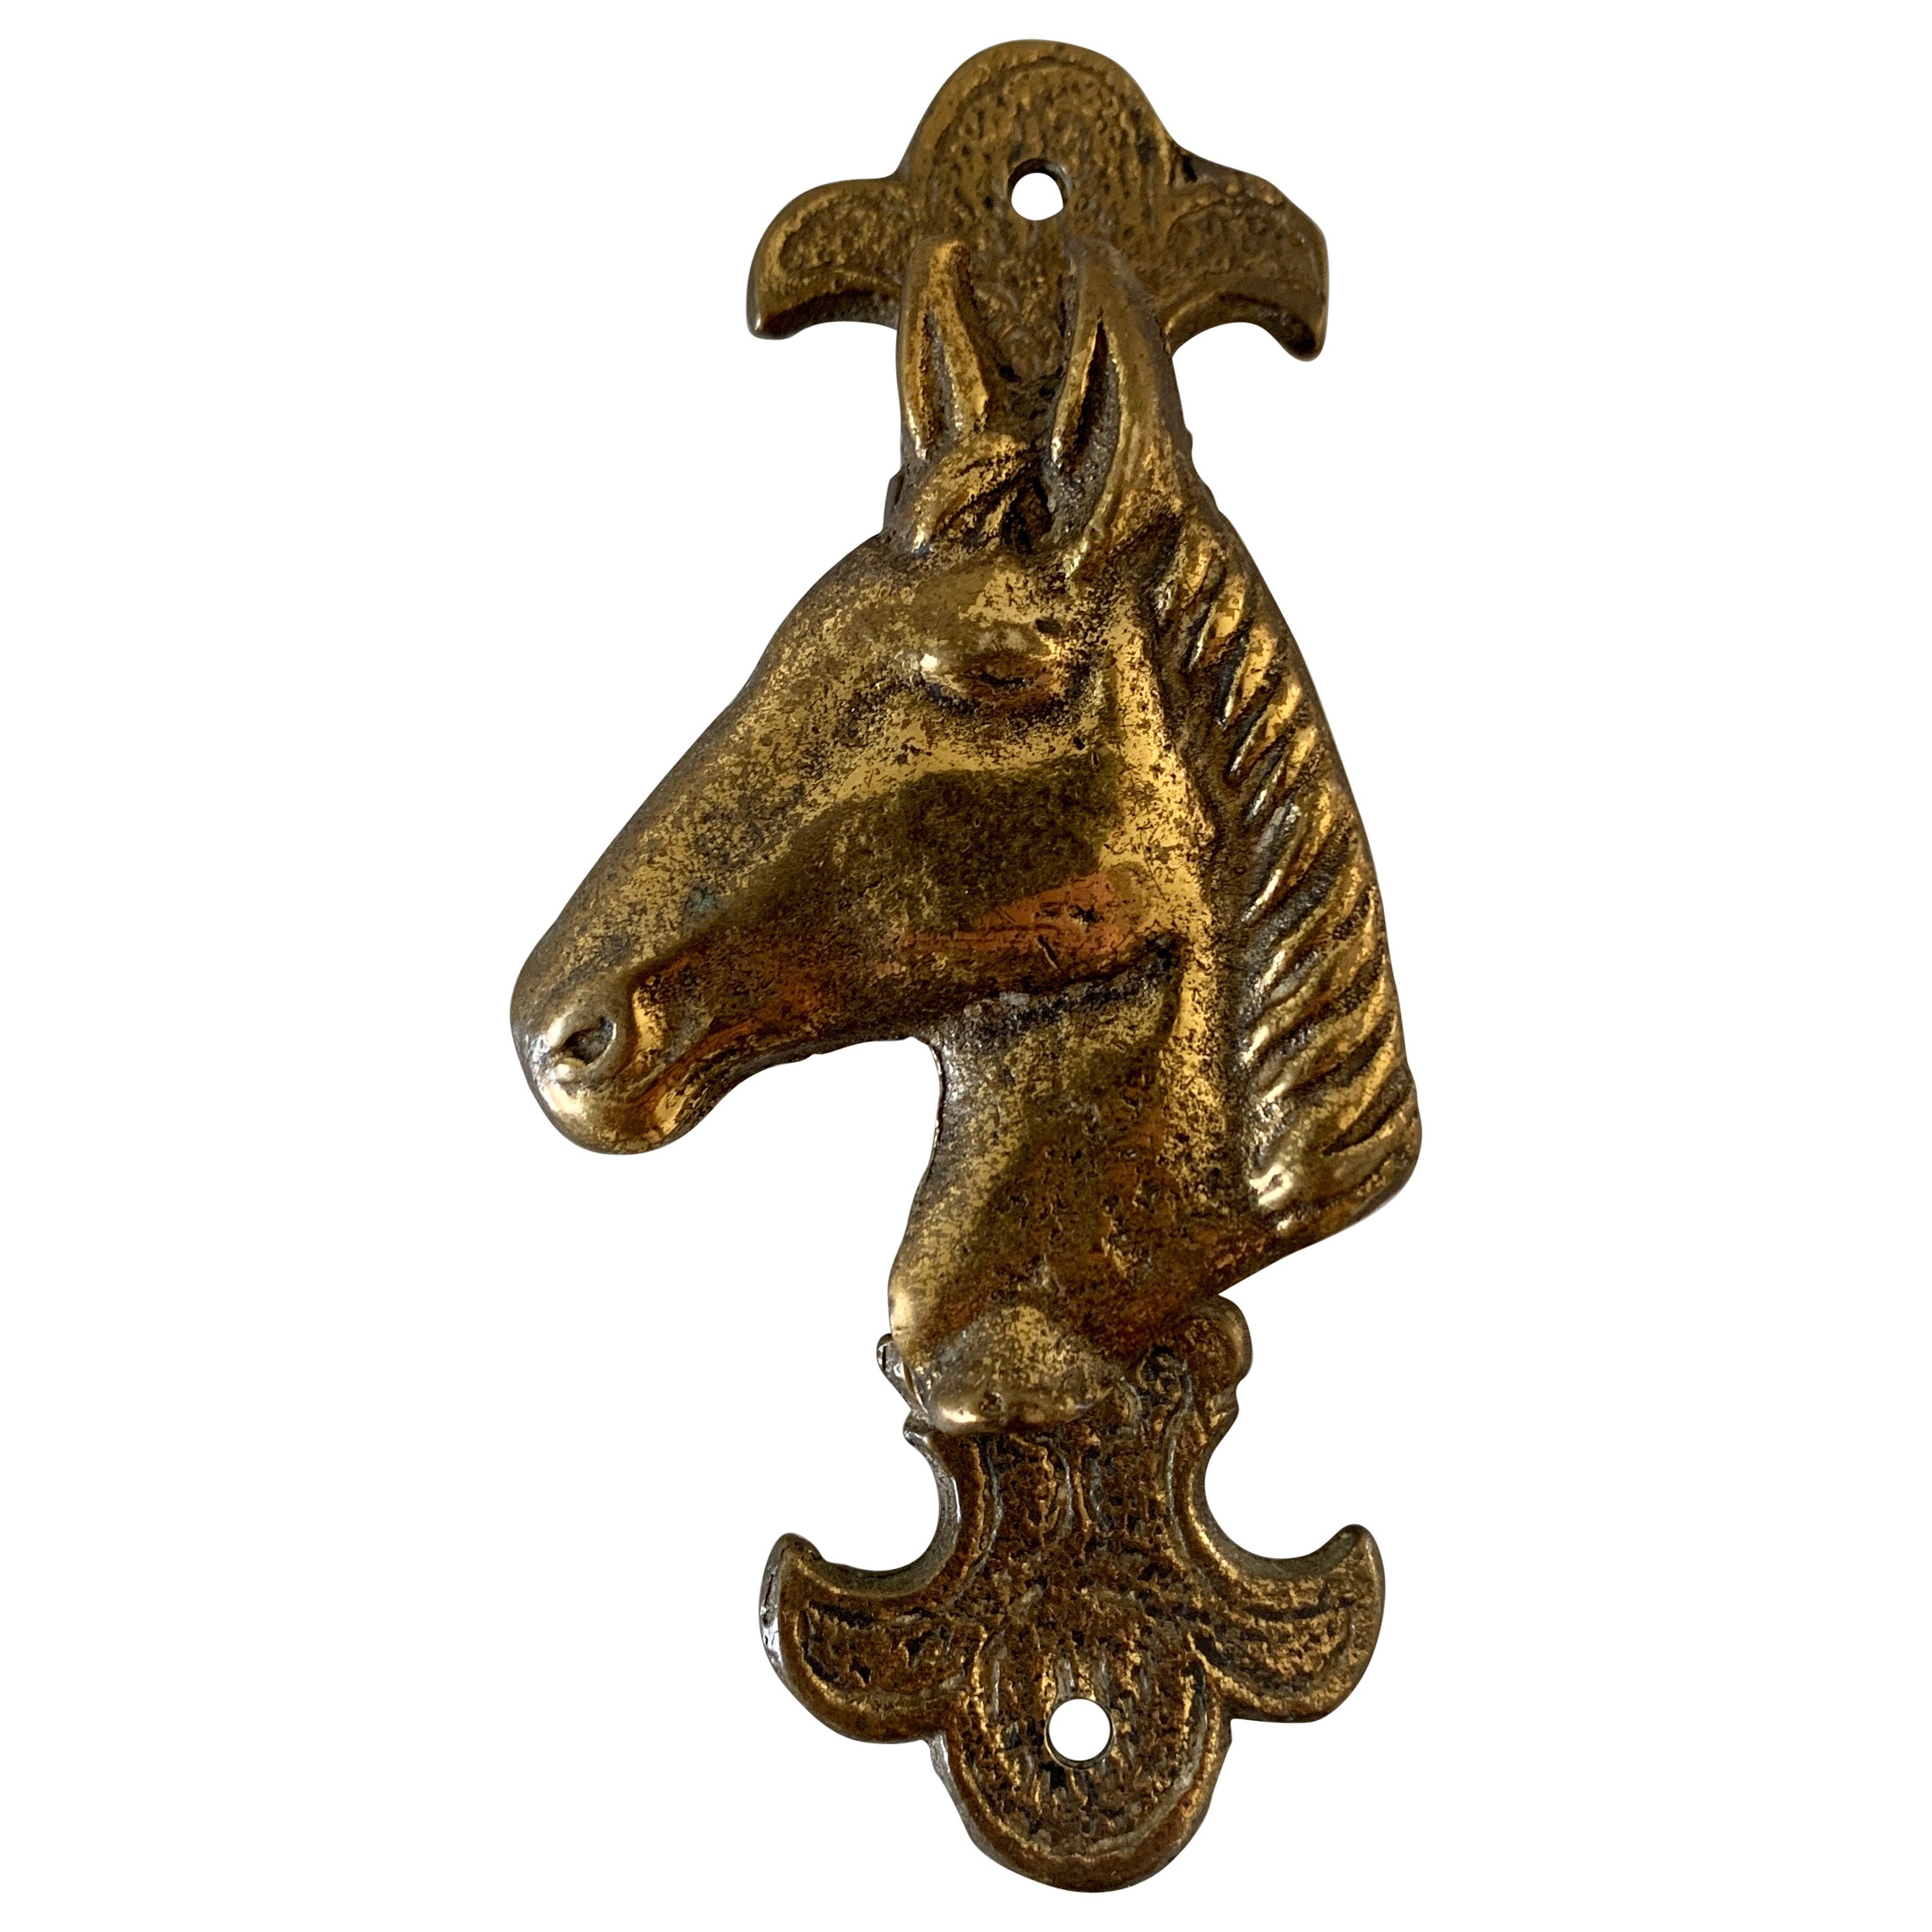 Vintage English Cast Brass Equestrian Horse Door Knocker